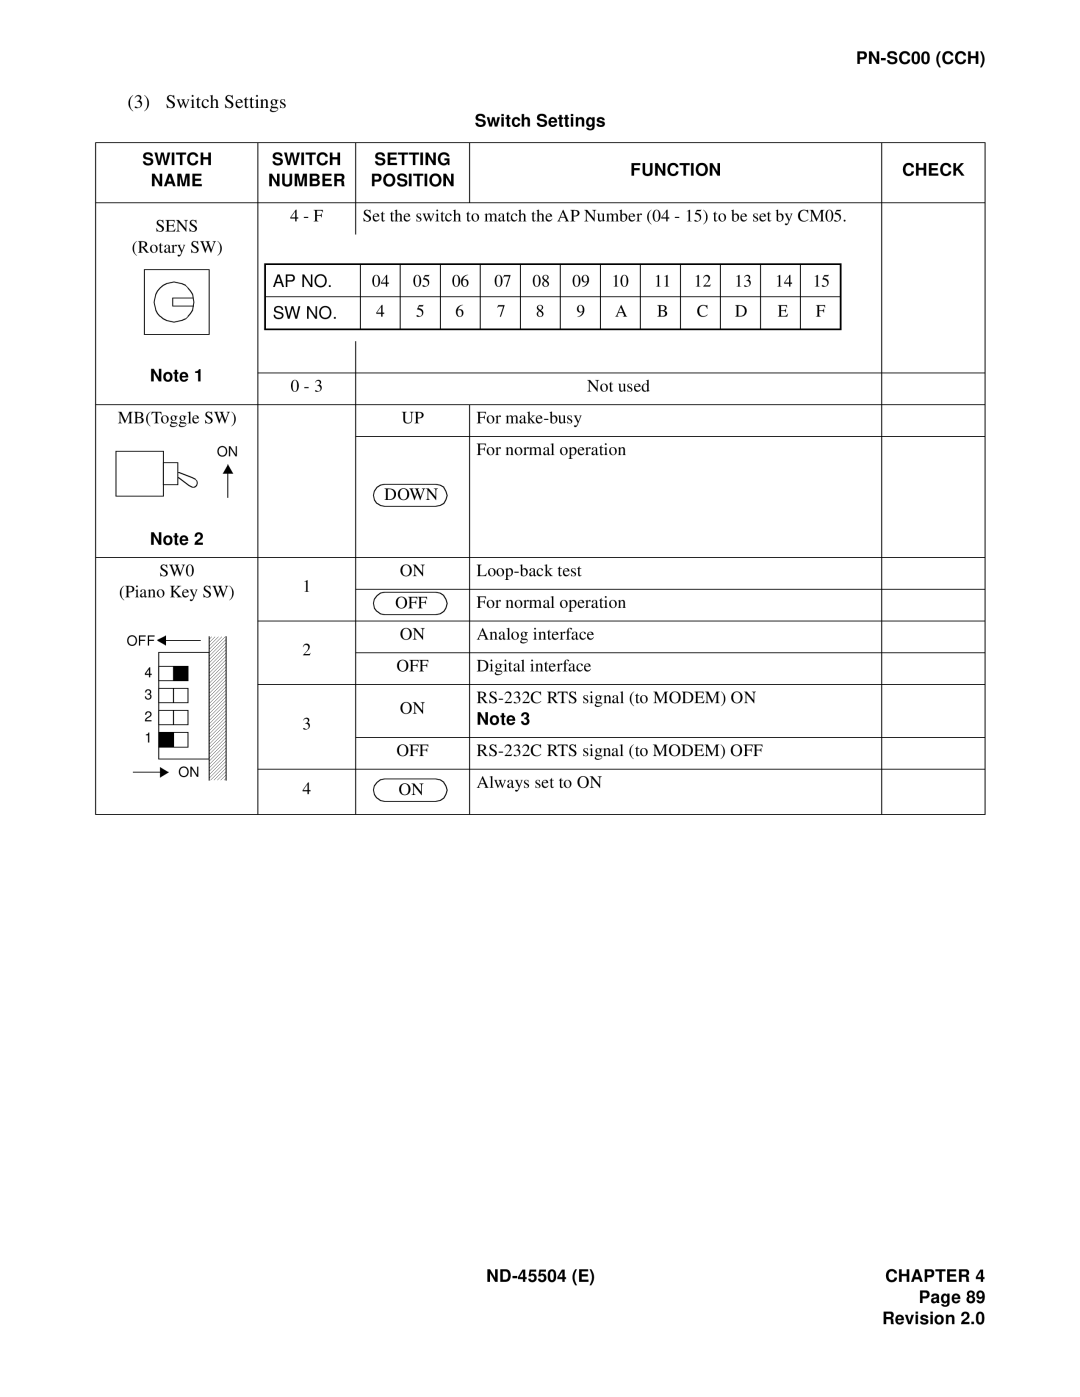 NEC 2000 IVS manual Switch Settings, Sens 